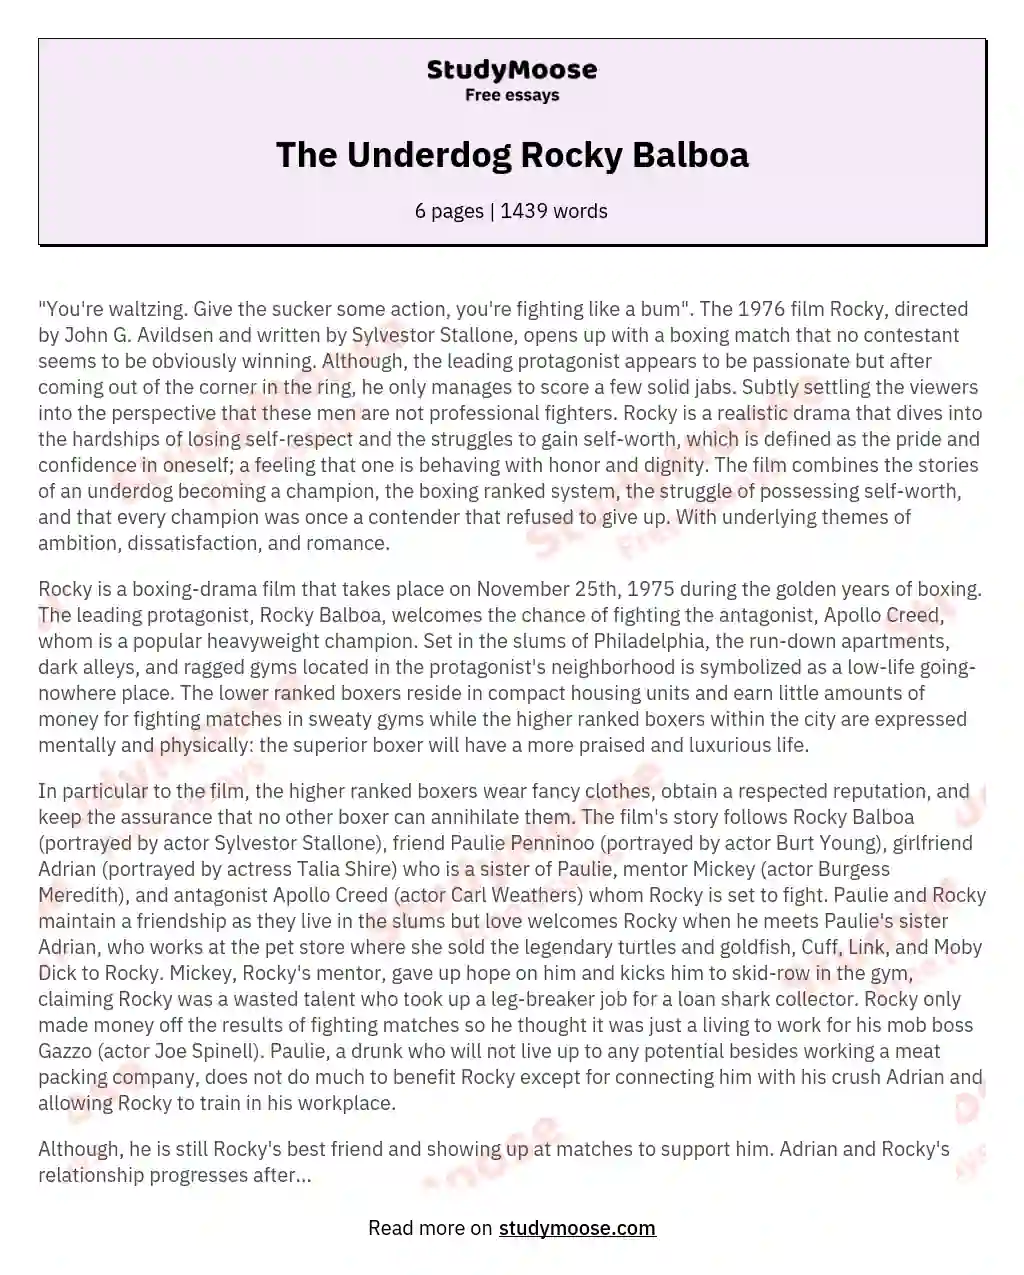 The Underdog Rocky Balboa essay